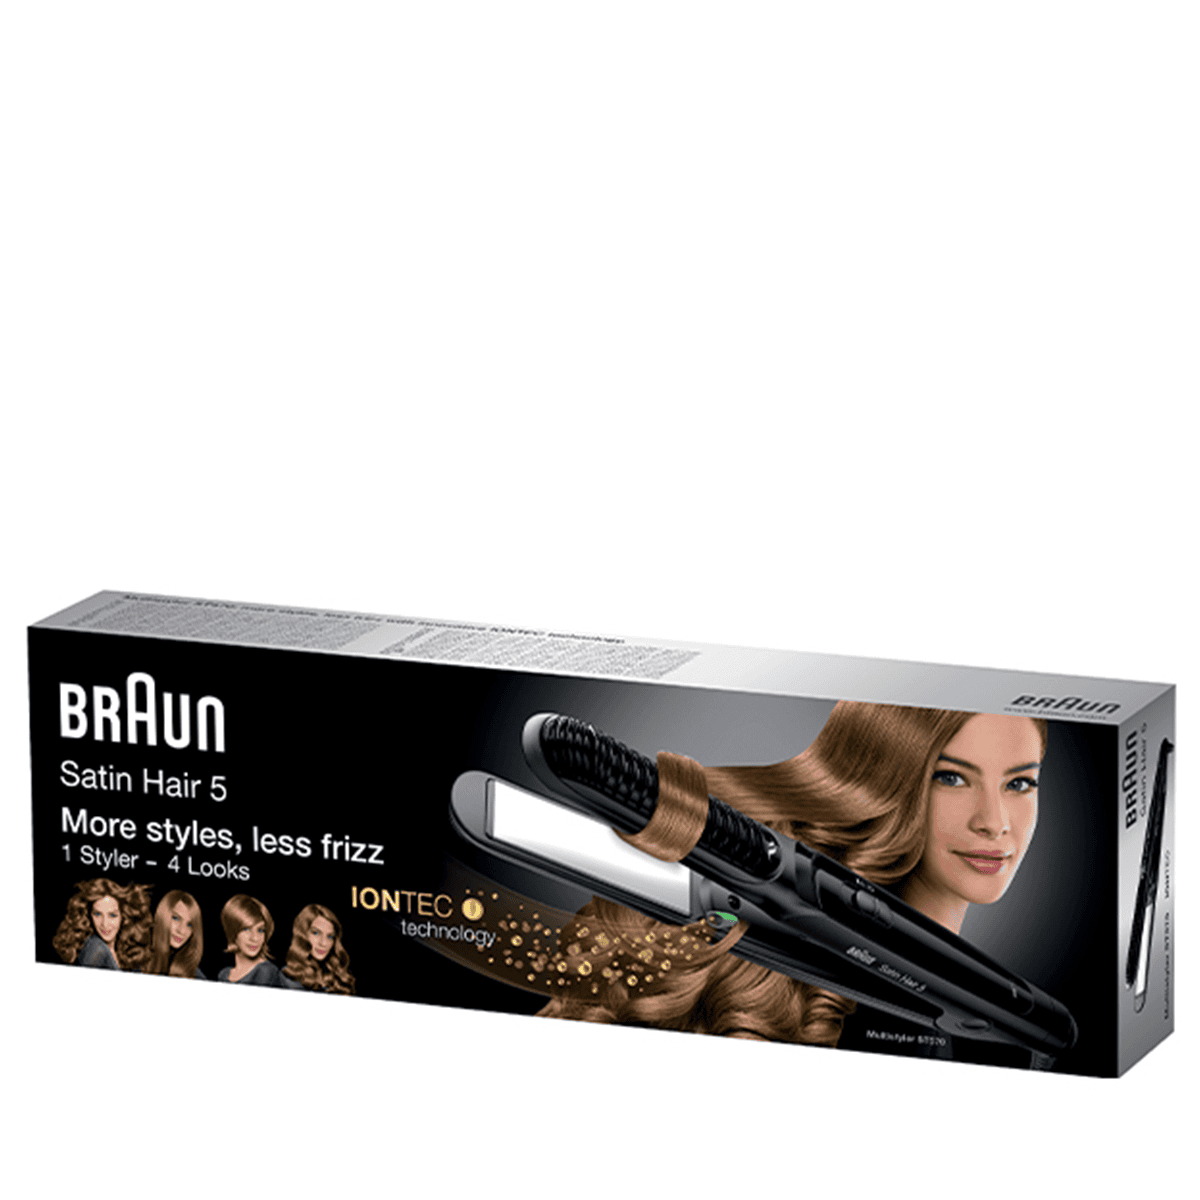 • 5 Straightener Hair Satin Braun Iontec -